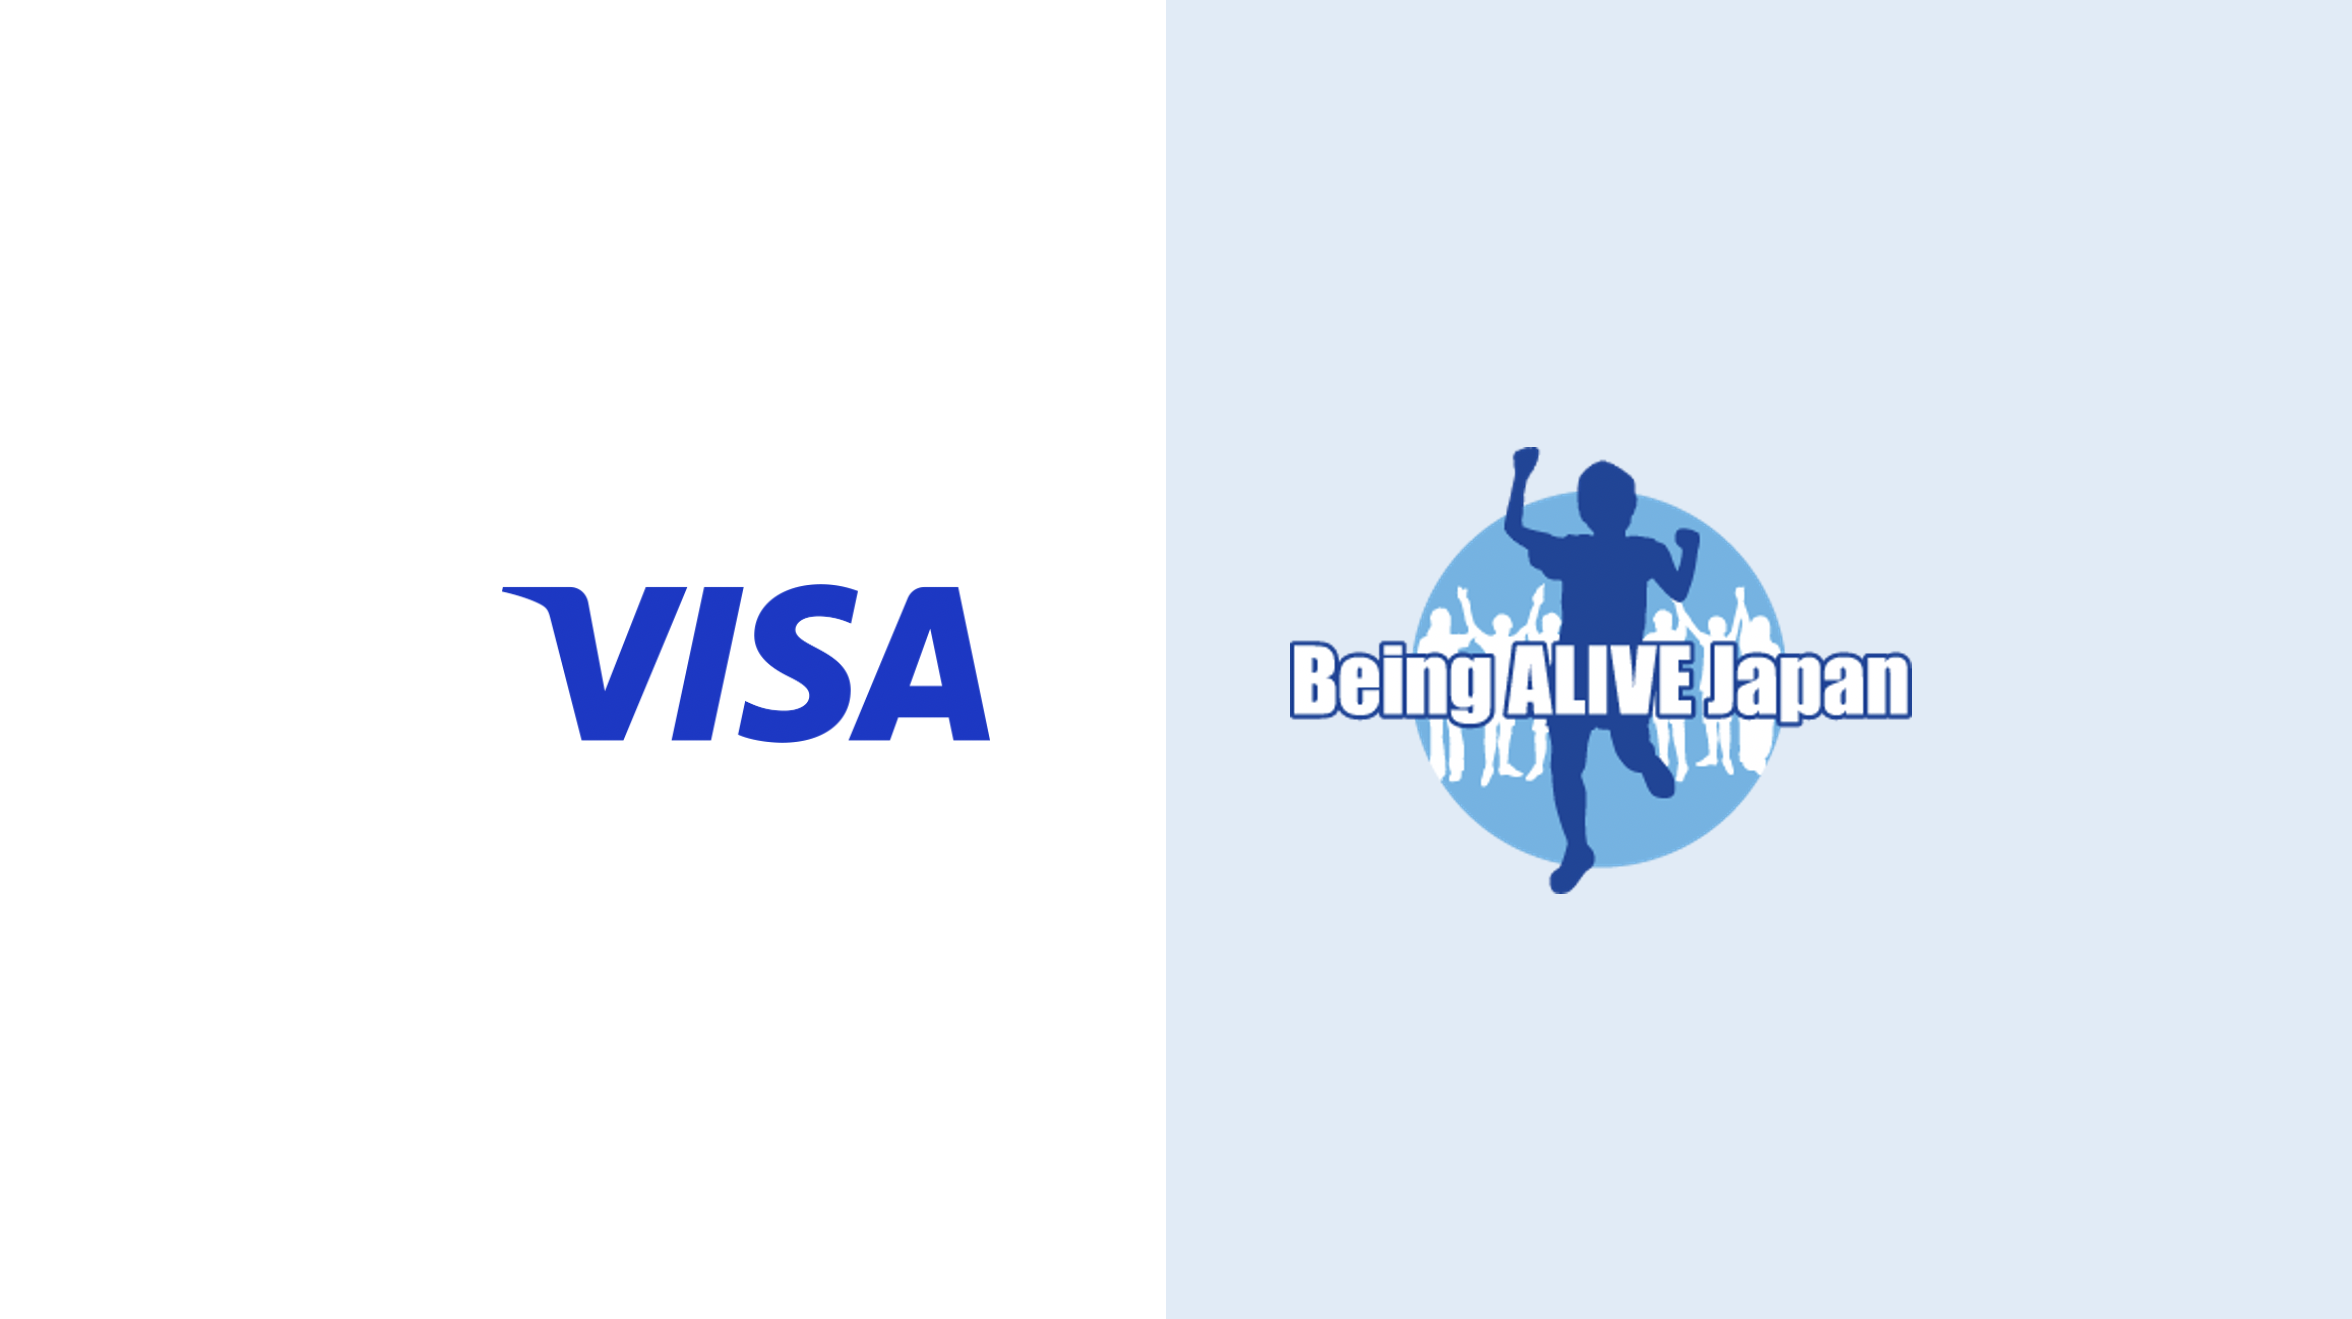 Visa様より、継続的にオフィシャル・パートナーとして御支援